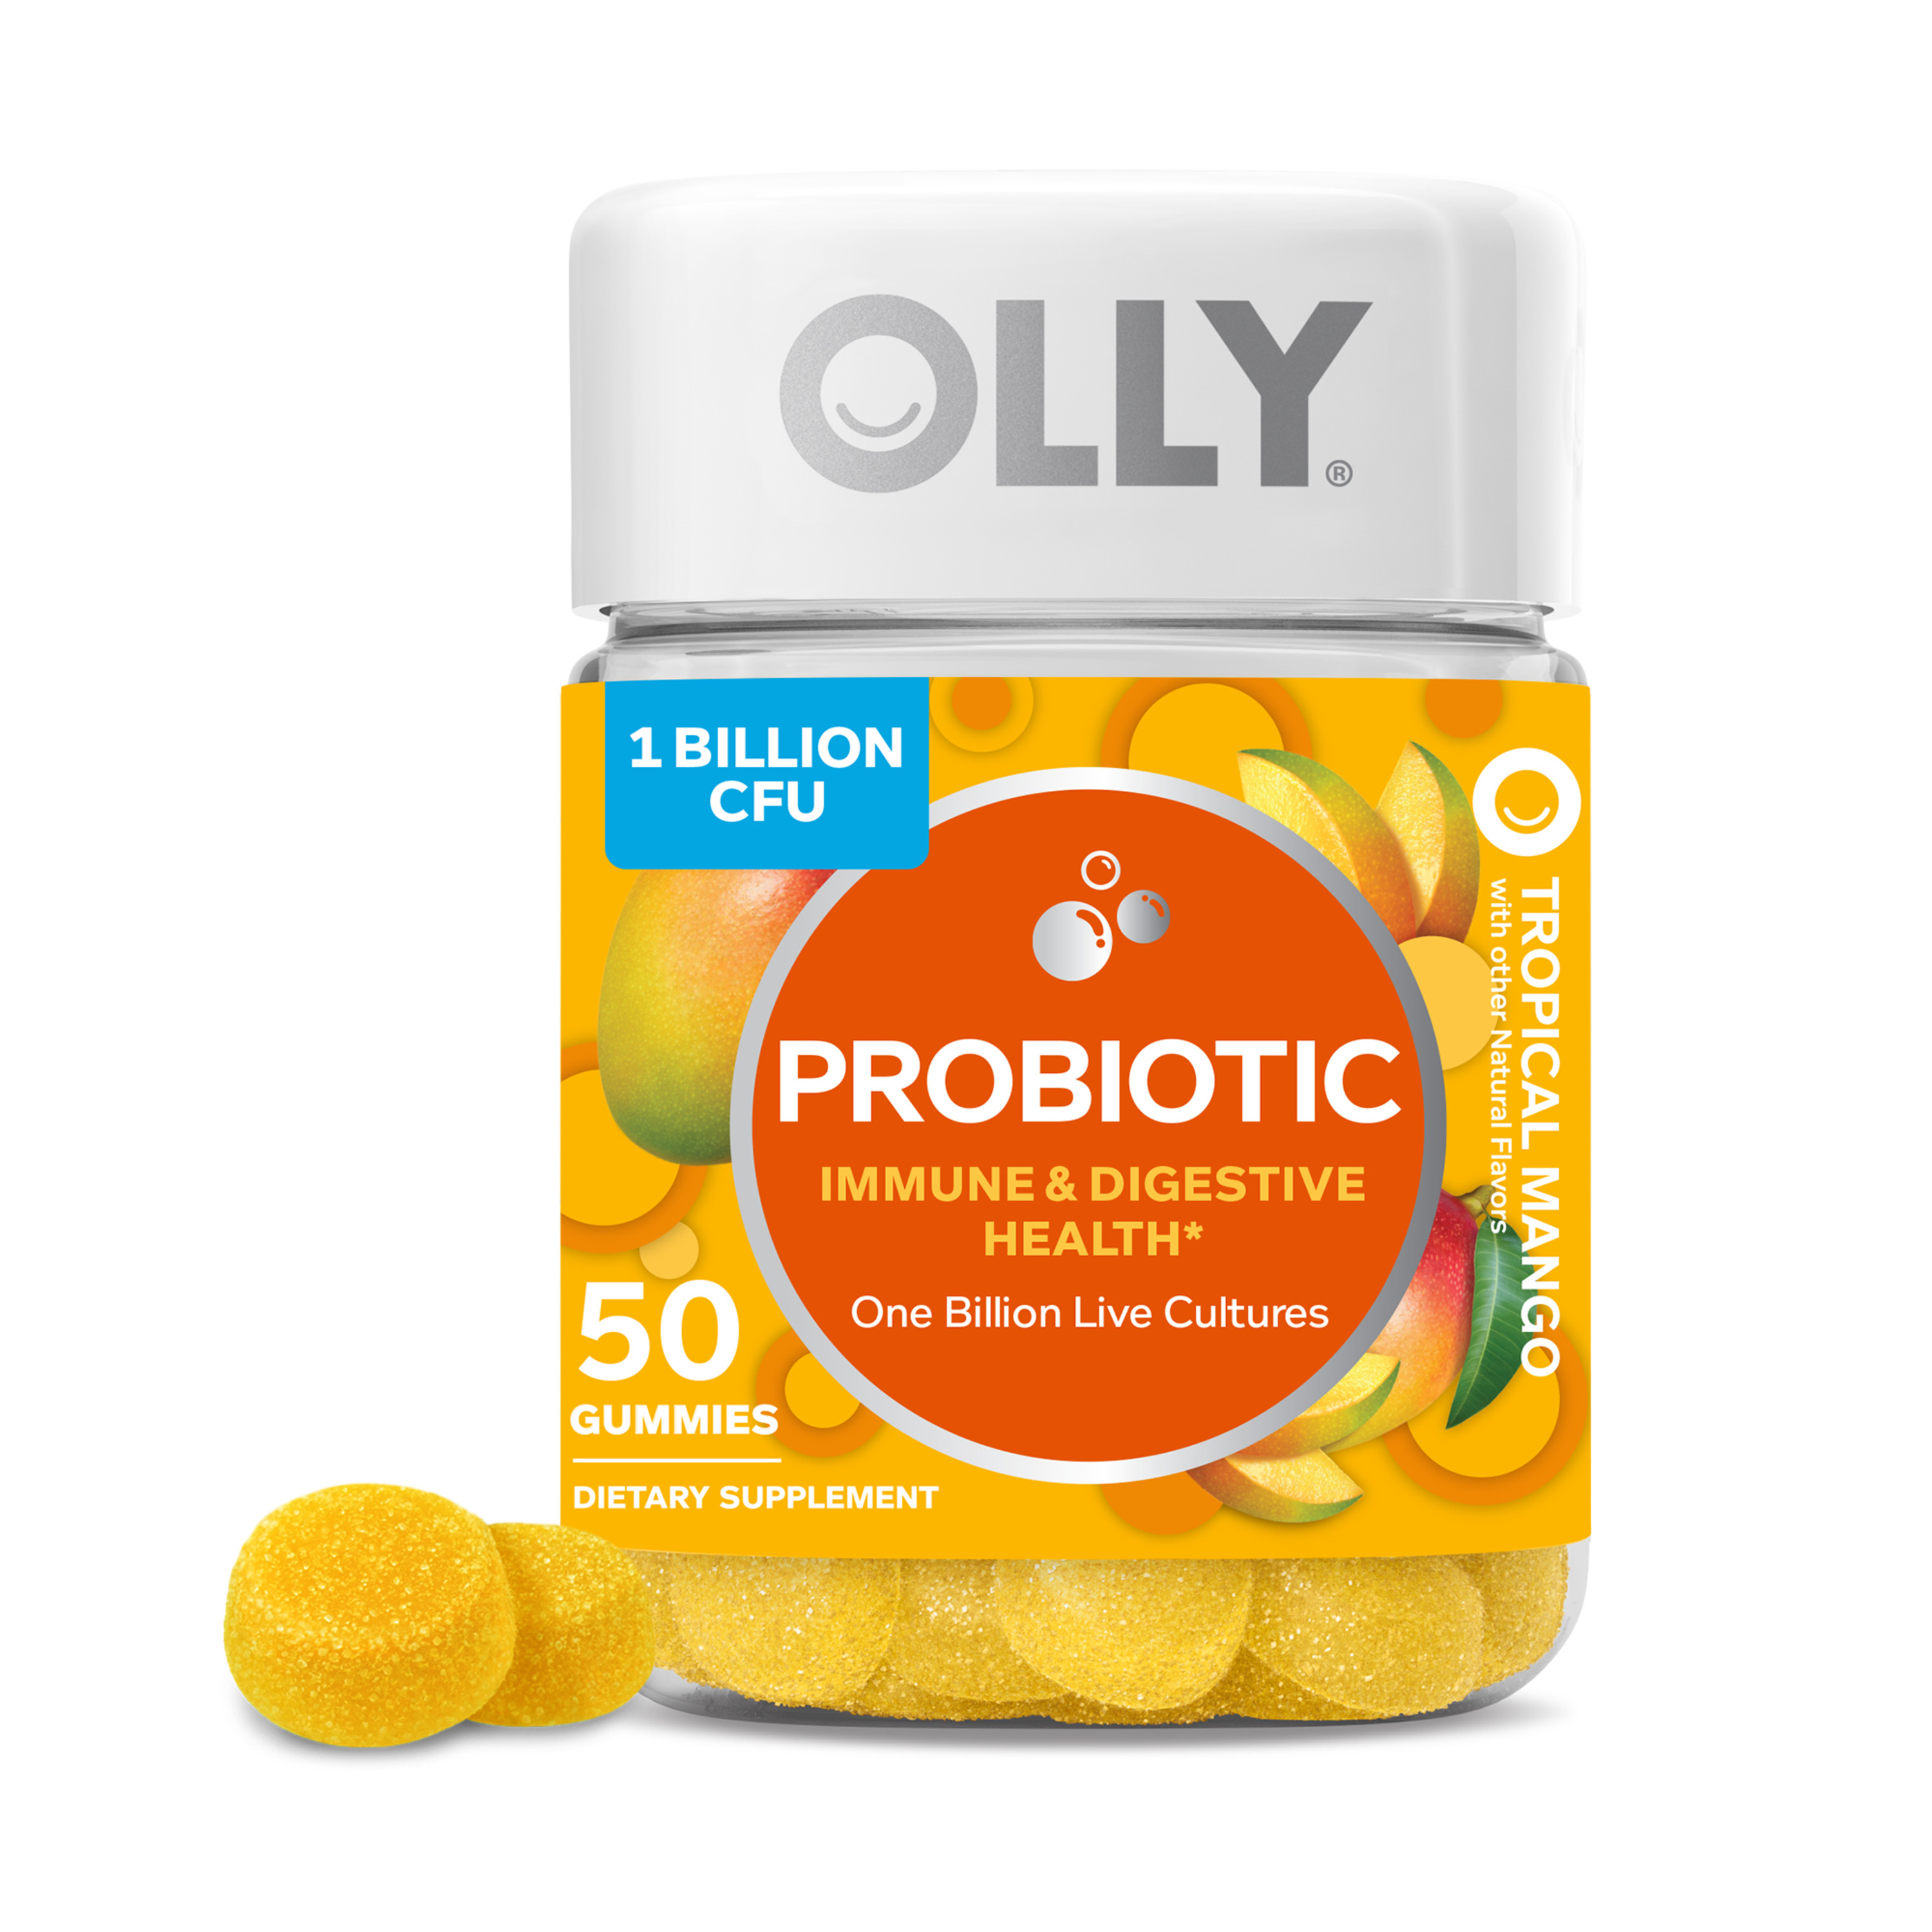 OLLY Probiotic Gummy, Immune & Digestive Health, Probiotic Supplement, Mango Flavor, 50 Ct - image 1 of 11